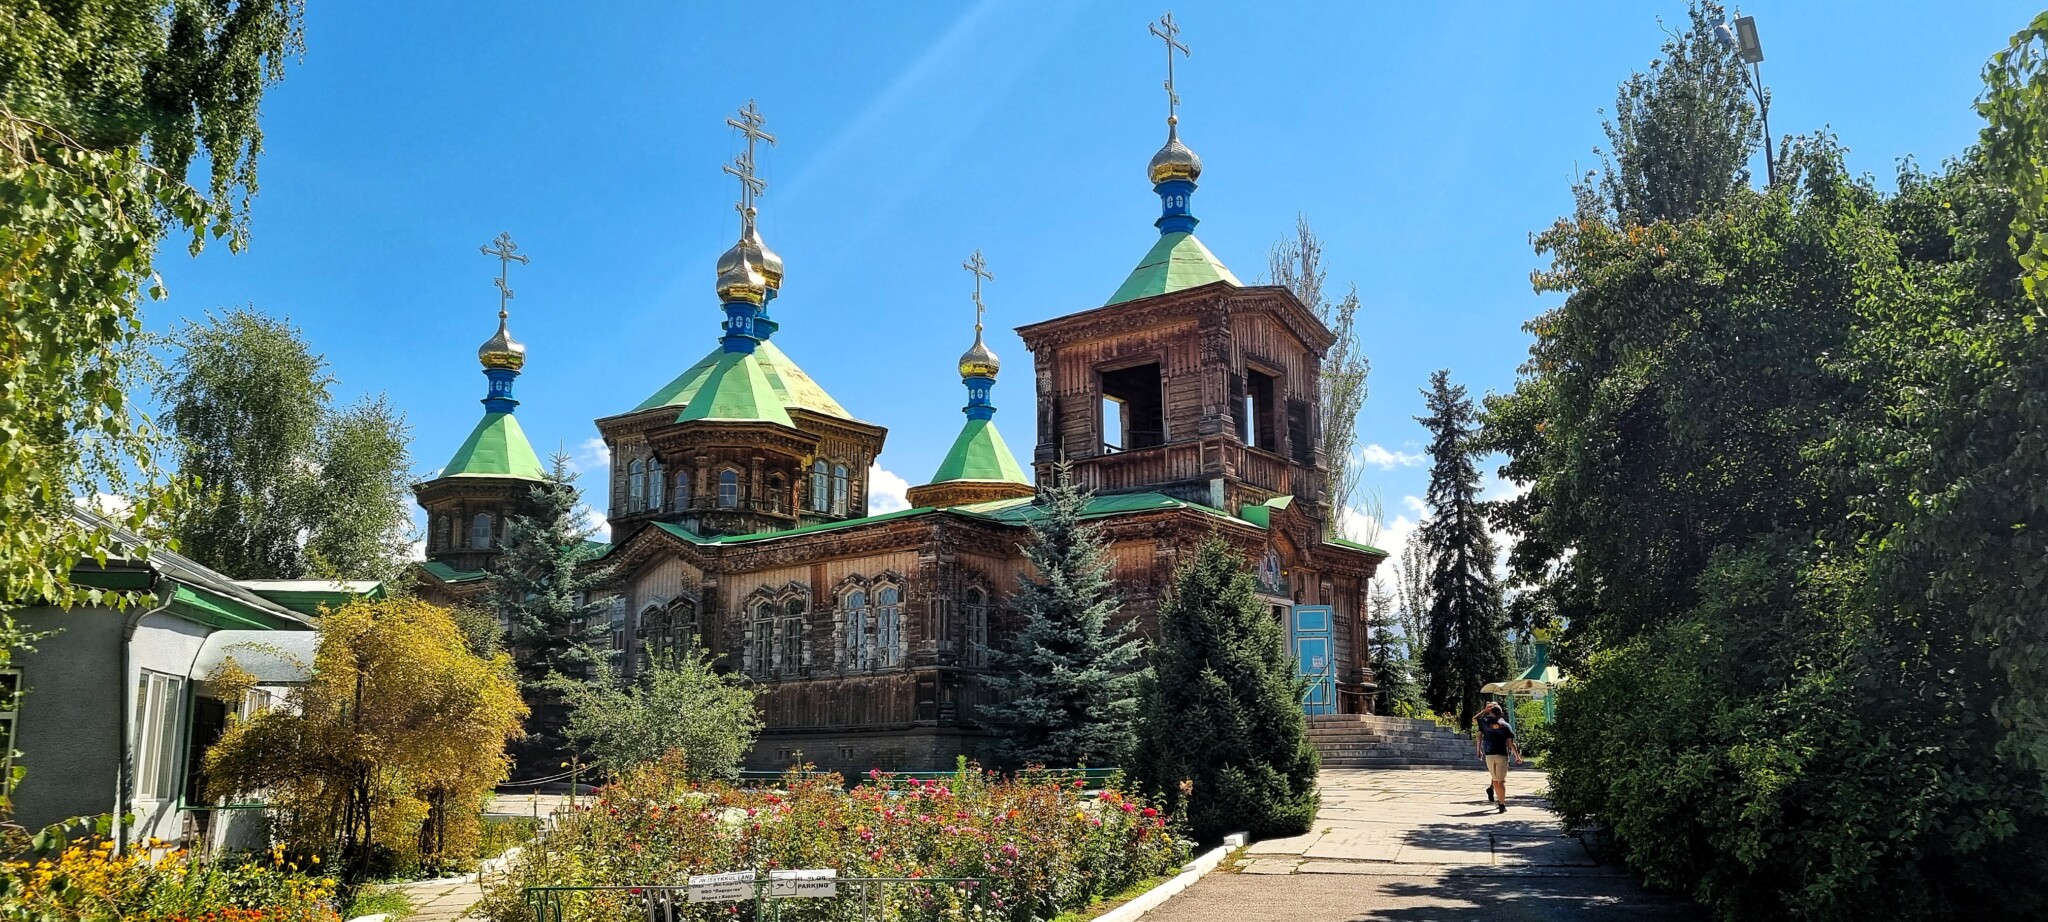 kirgistan-cerkiew